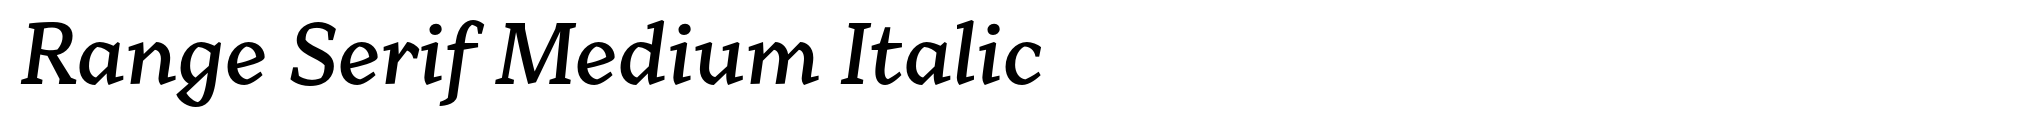 Range Serif Medium Italic image